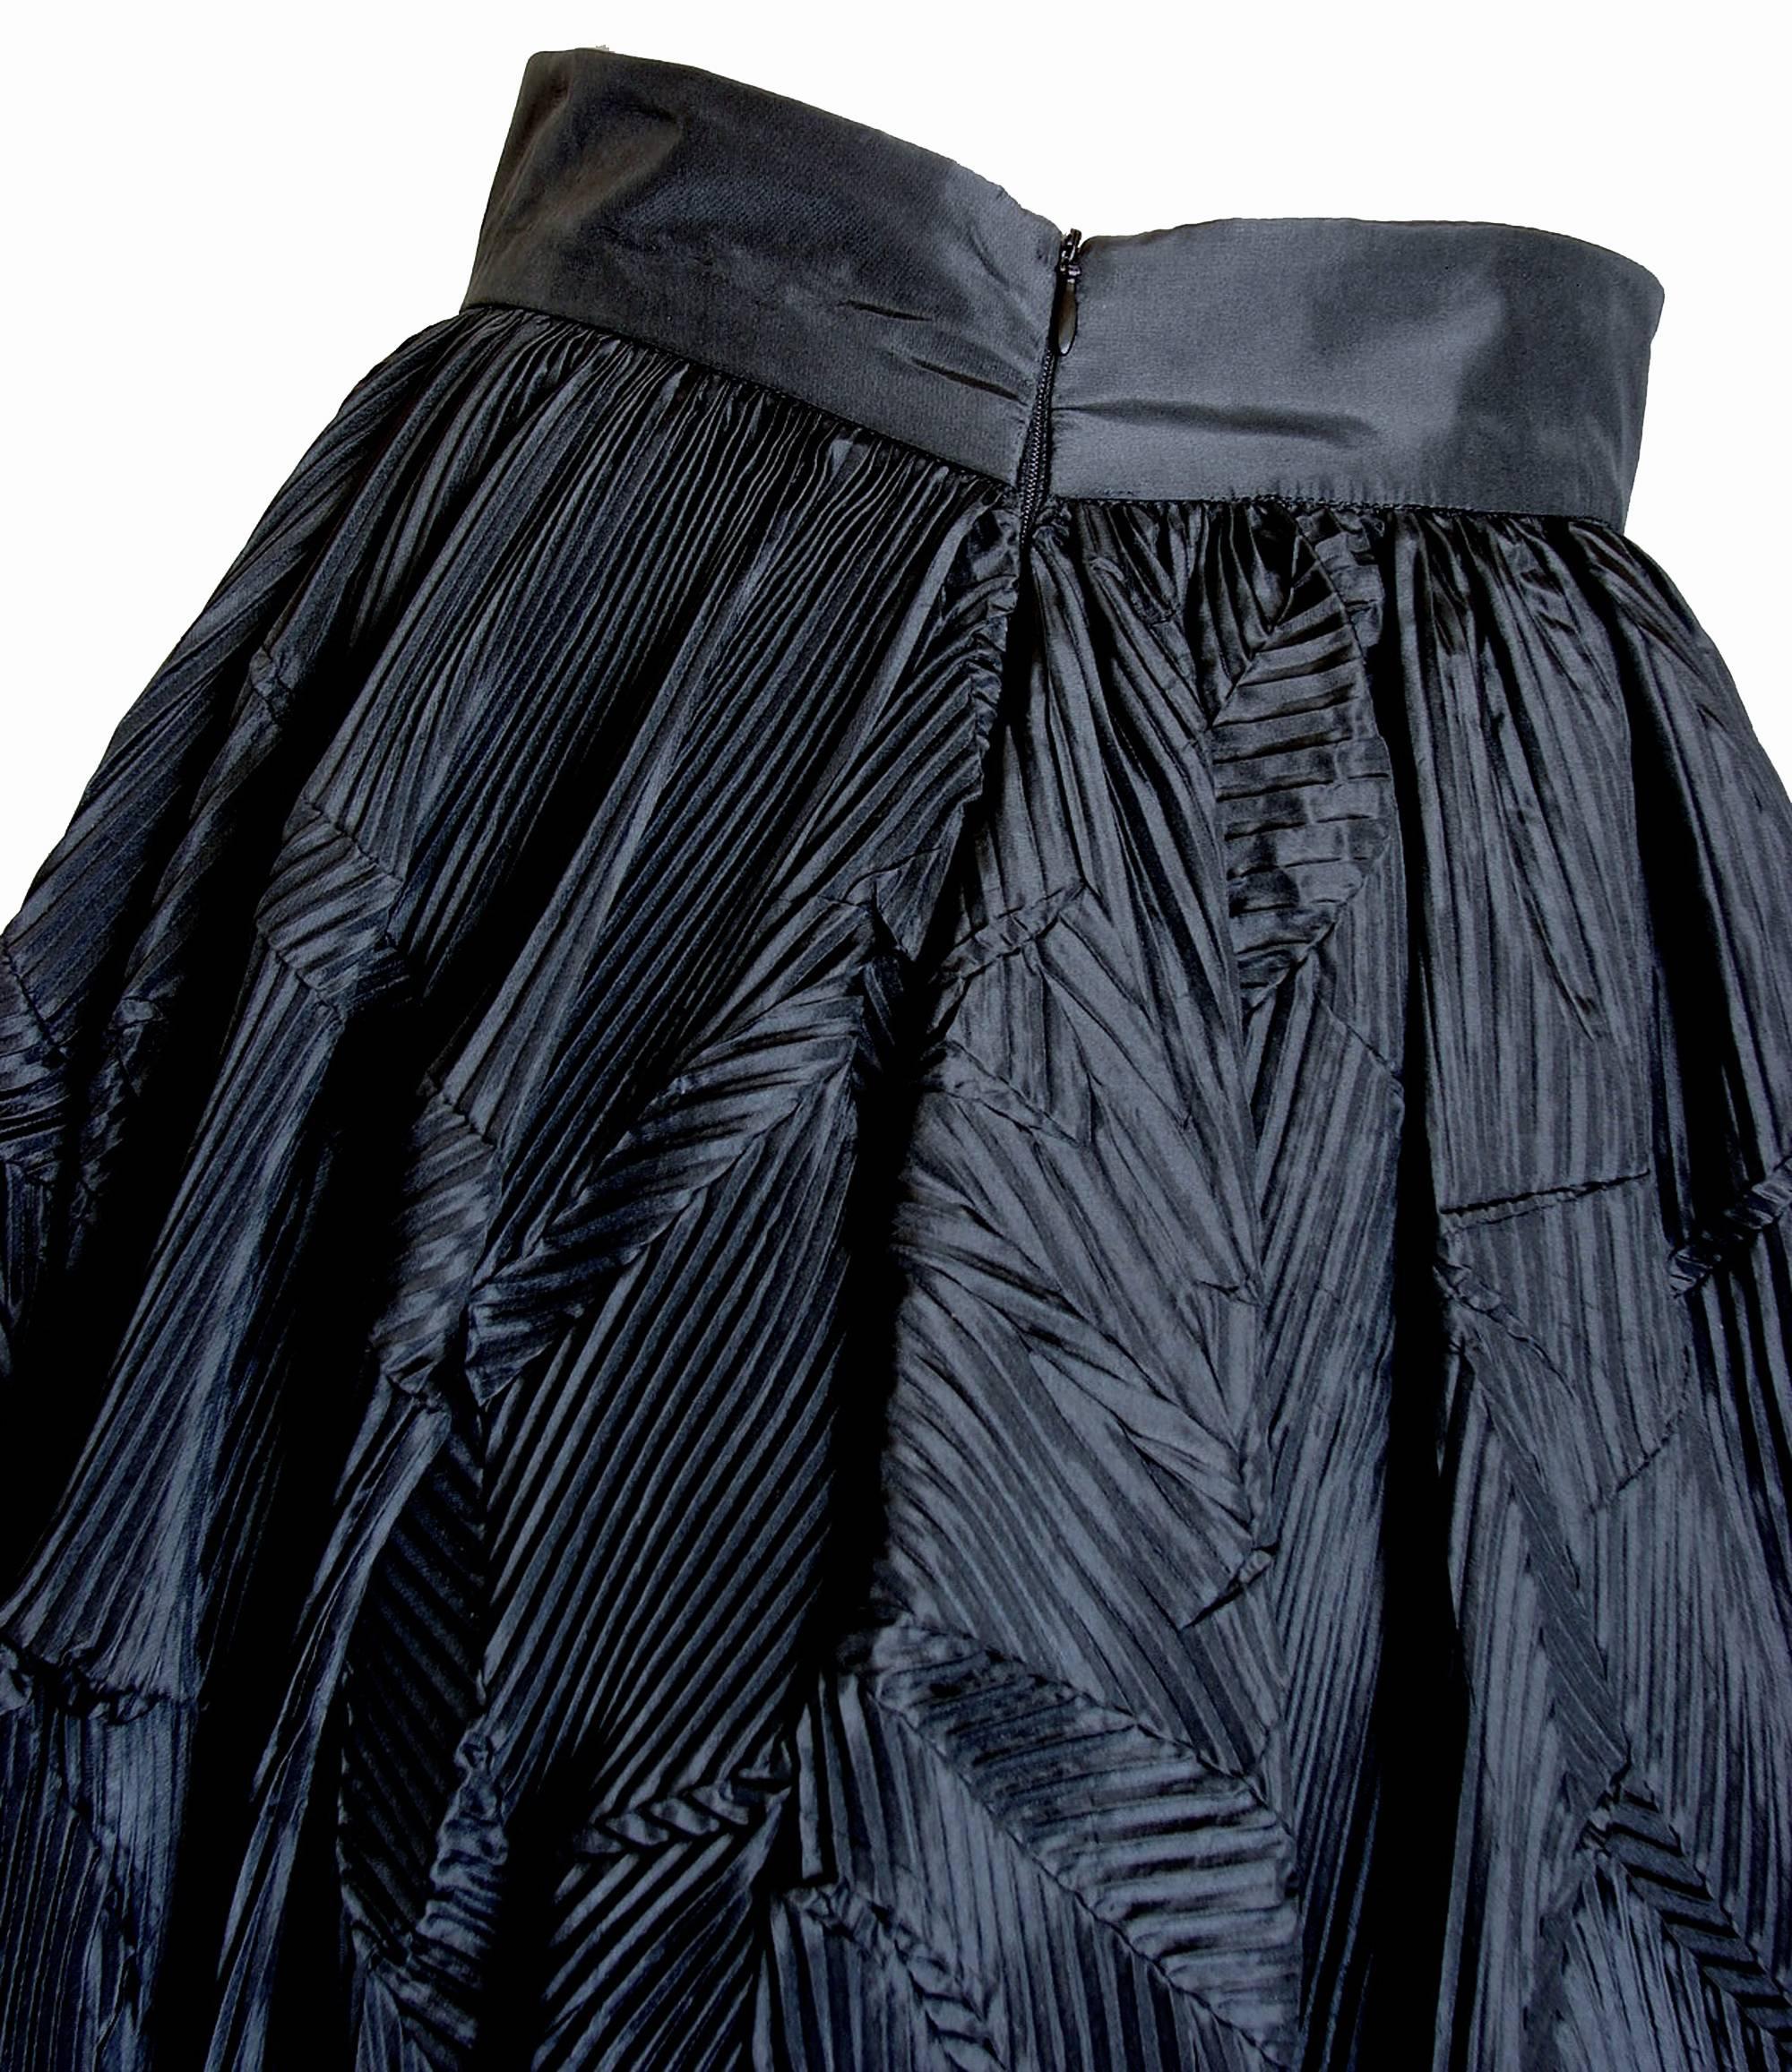 Sully Bonnelly Formal Skirt Black Full Length Abstract Pleated Avant Garde Sz 8 For Sale 5